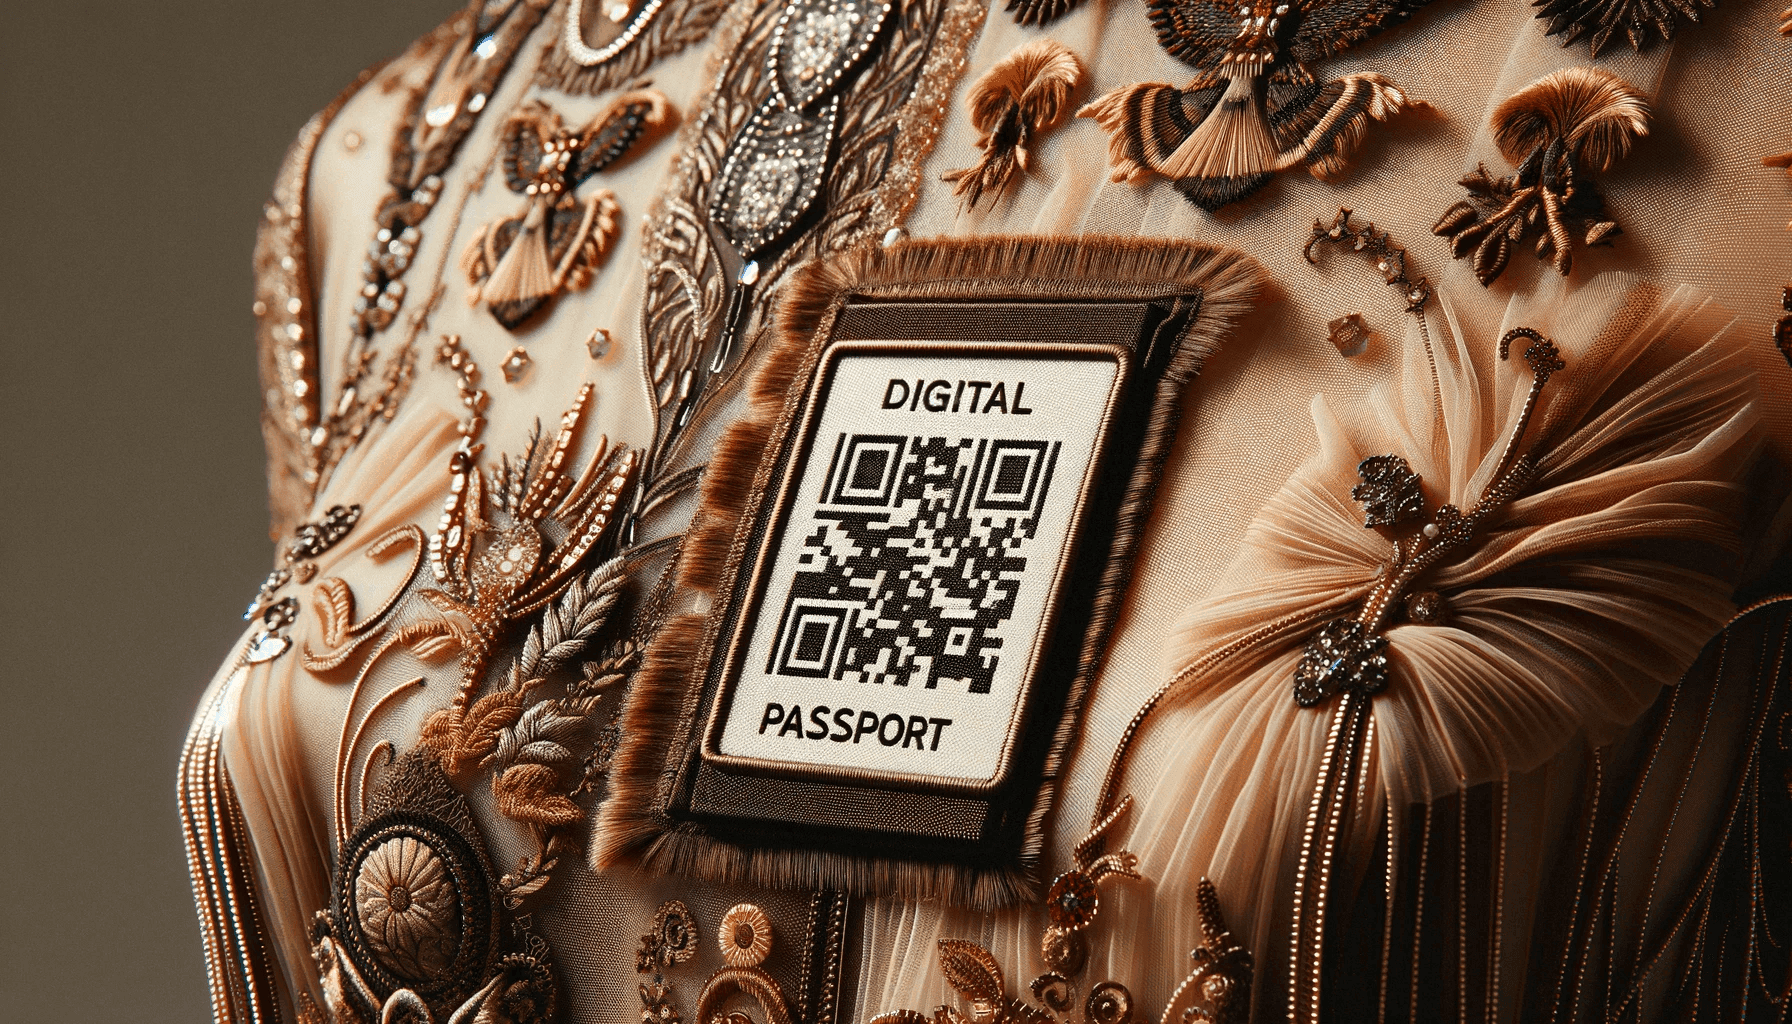 The Digital Product Passport